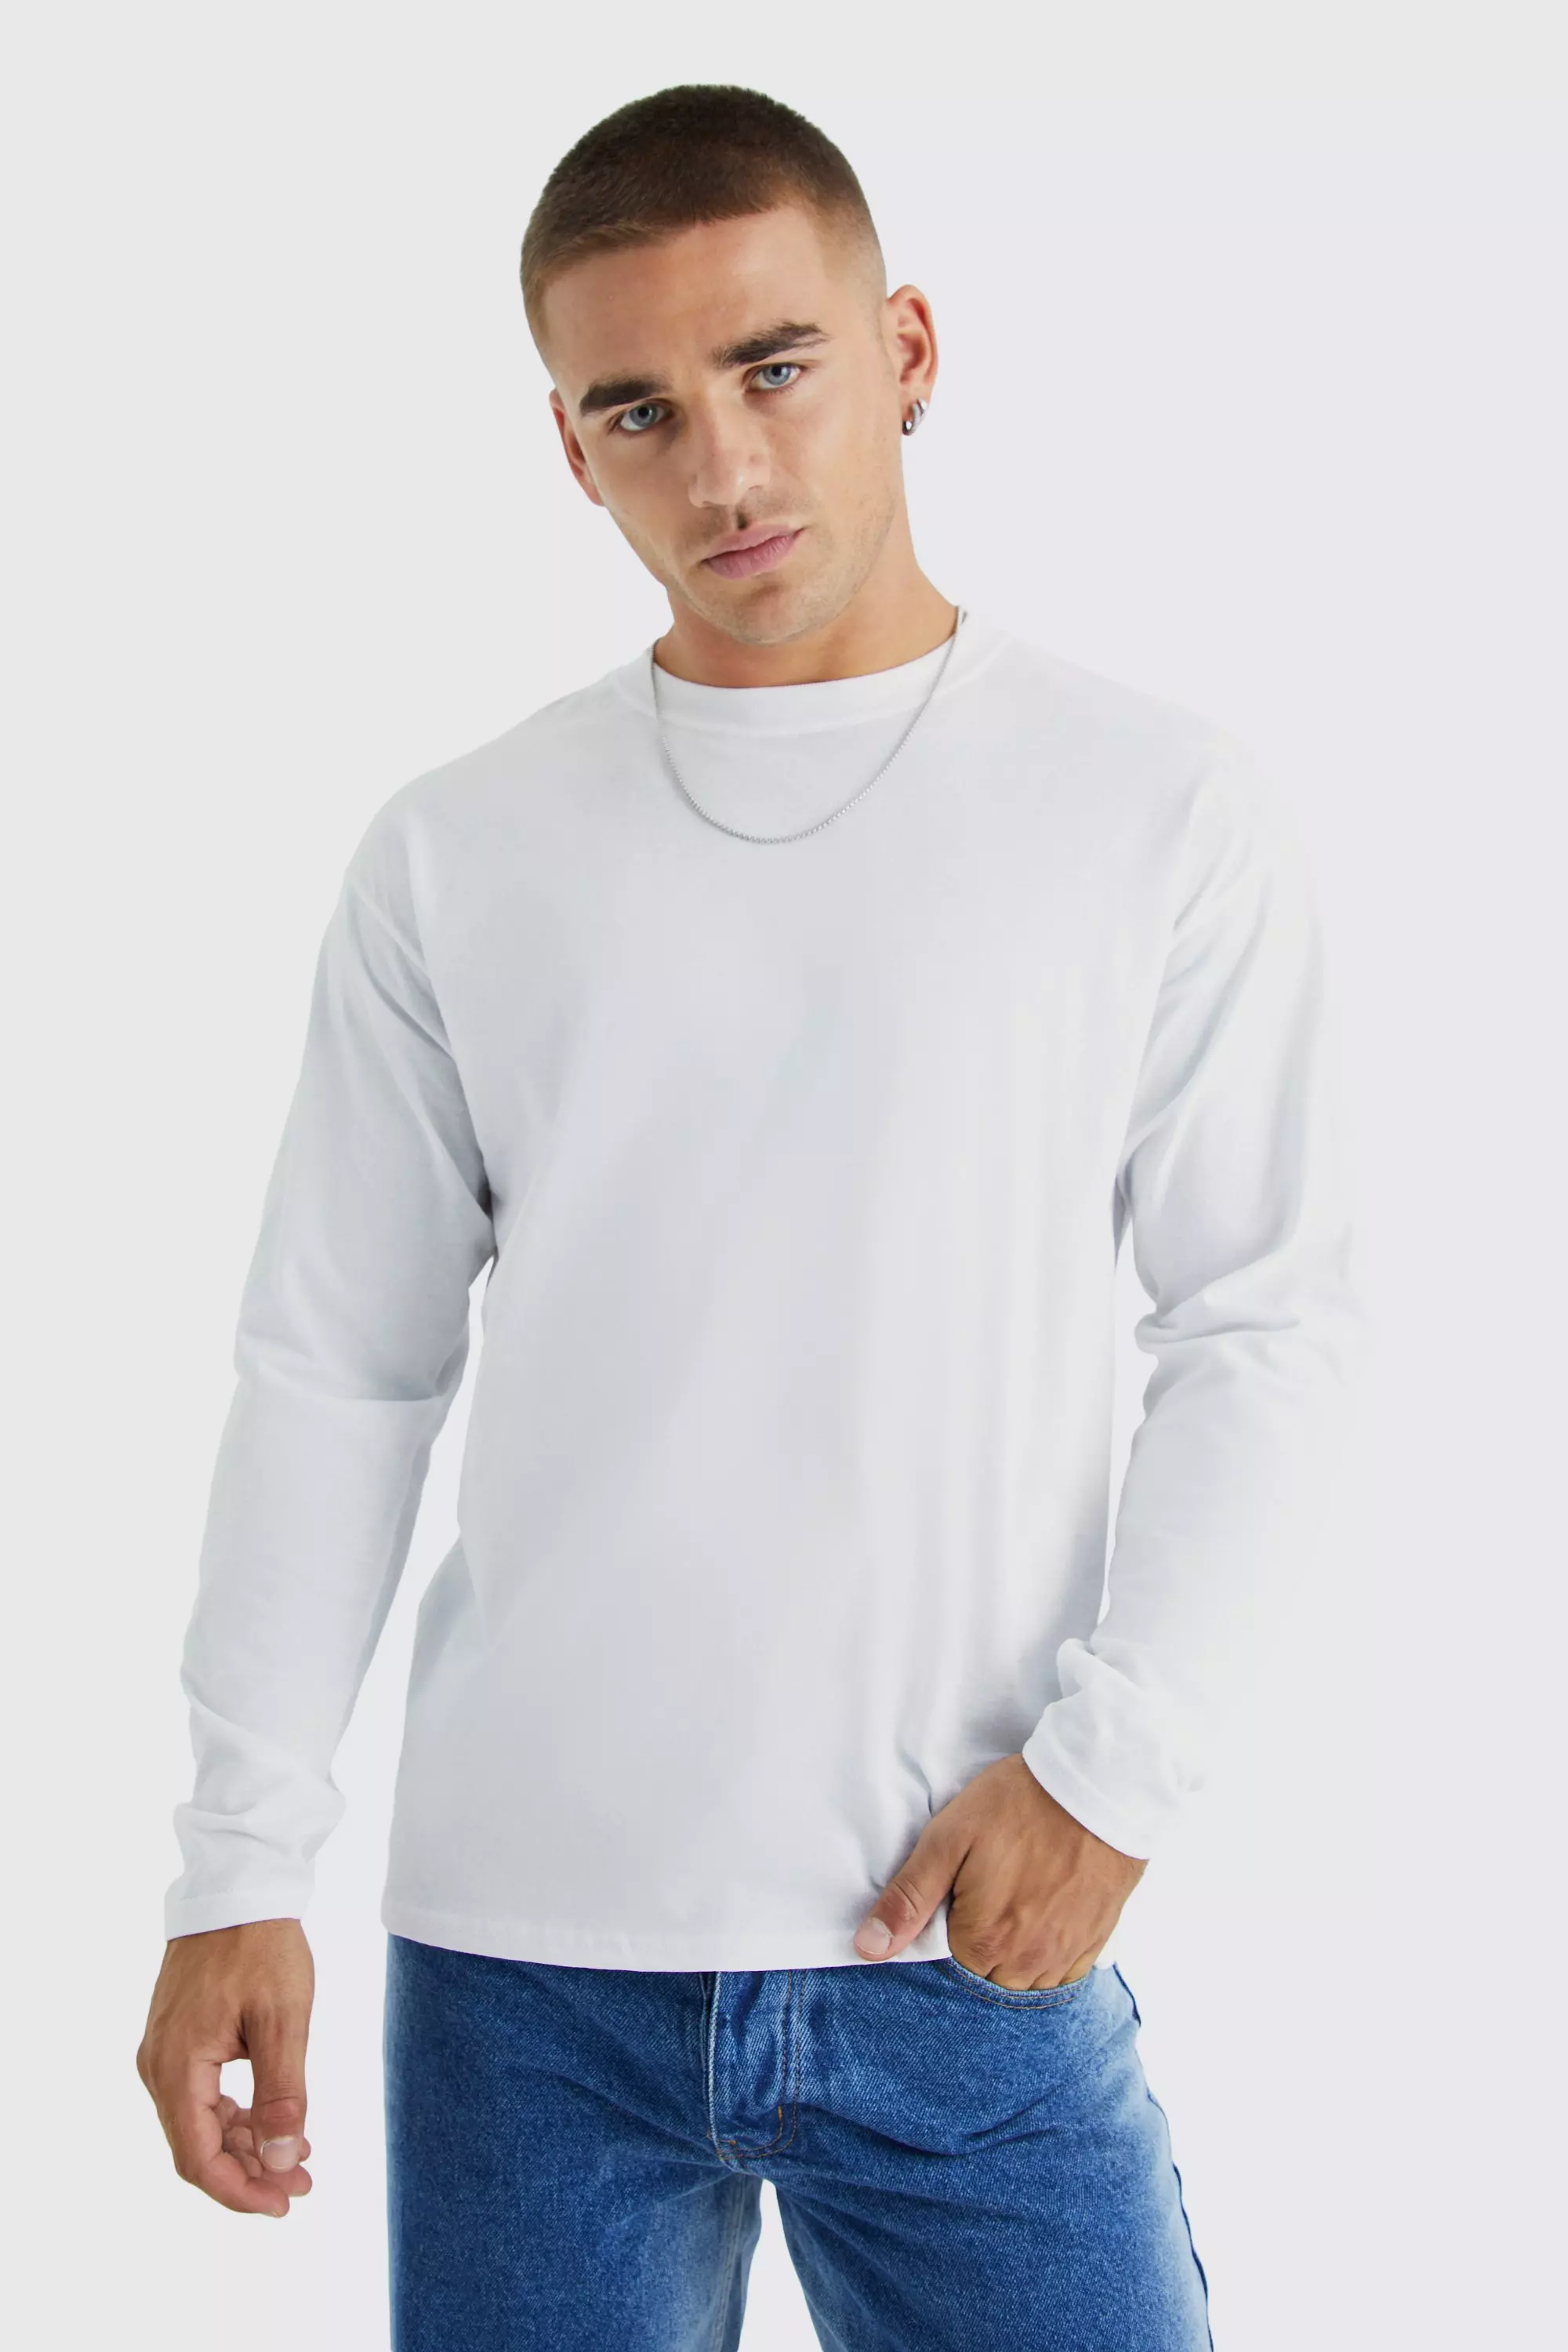 Shop Men's T-Shirts, Crewneck, Long Sleeve & More